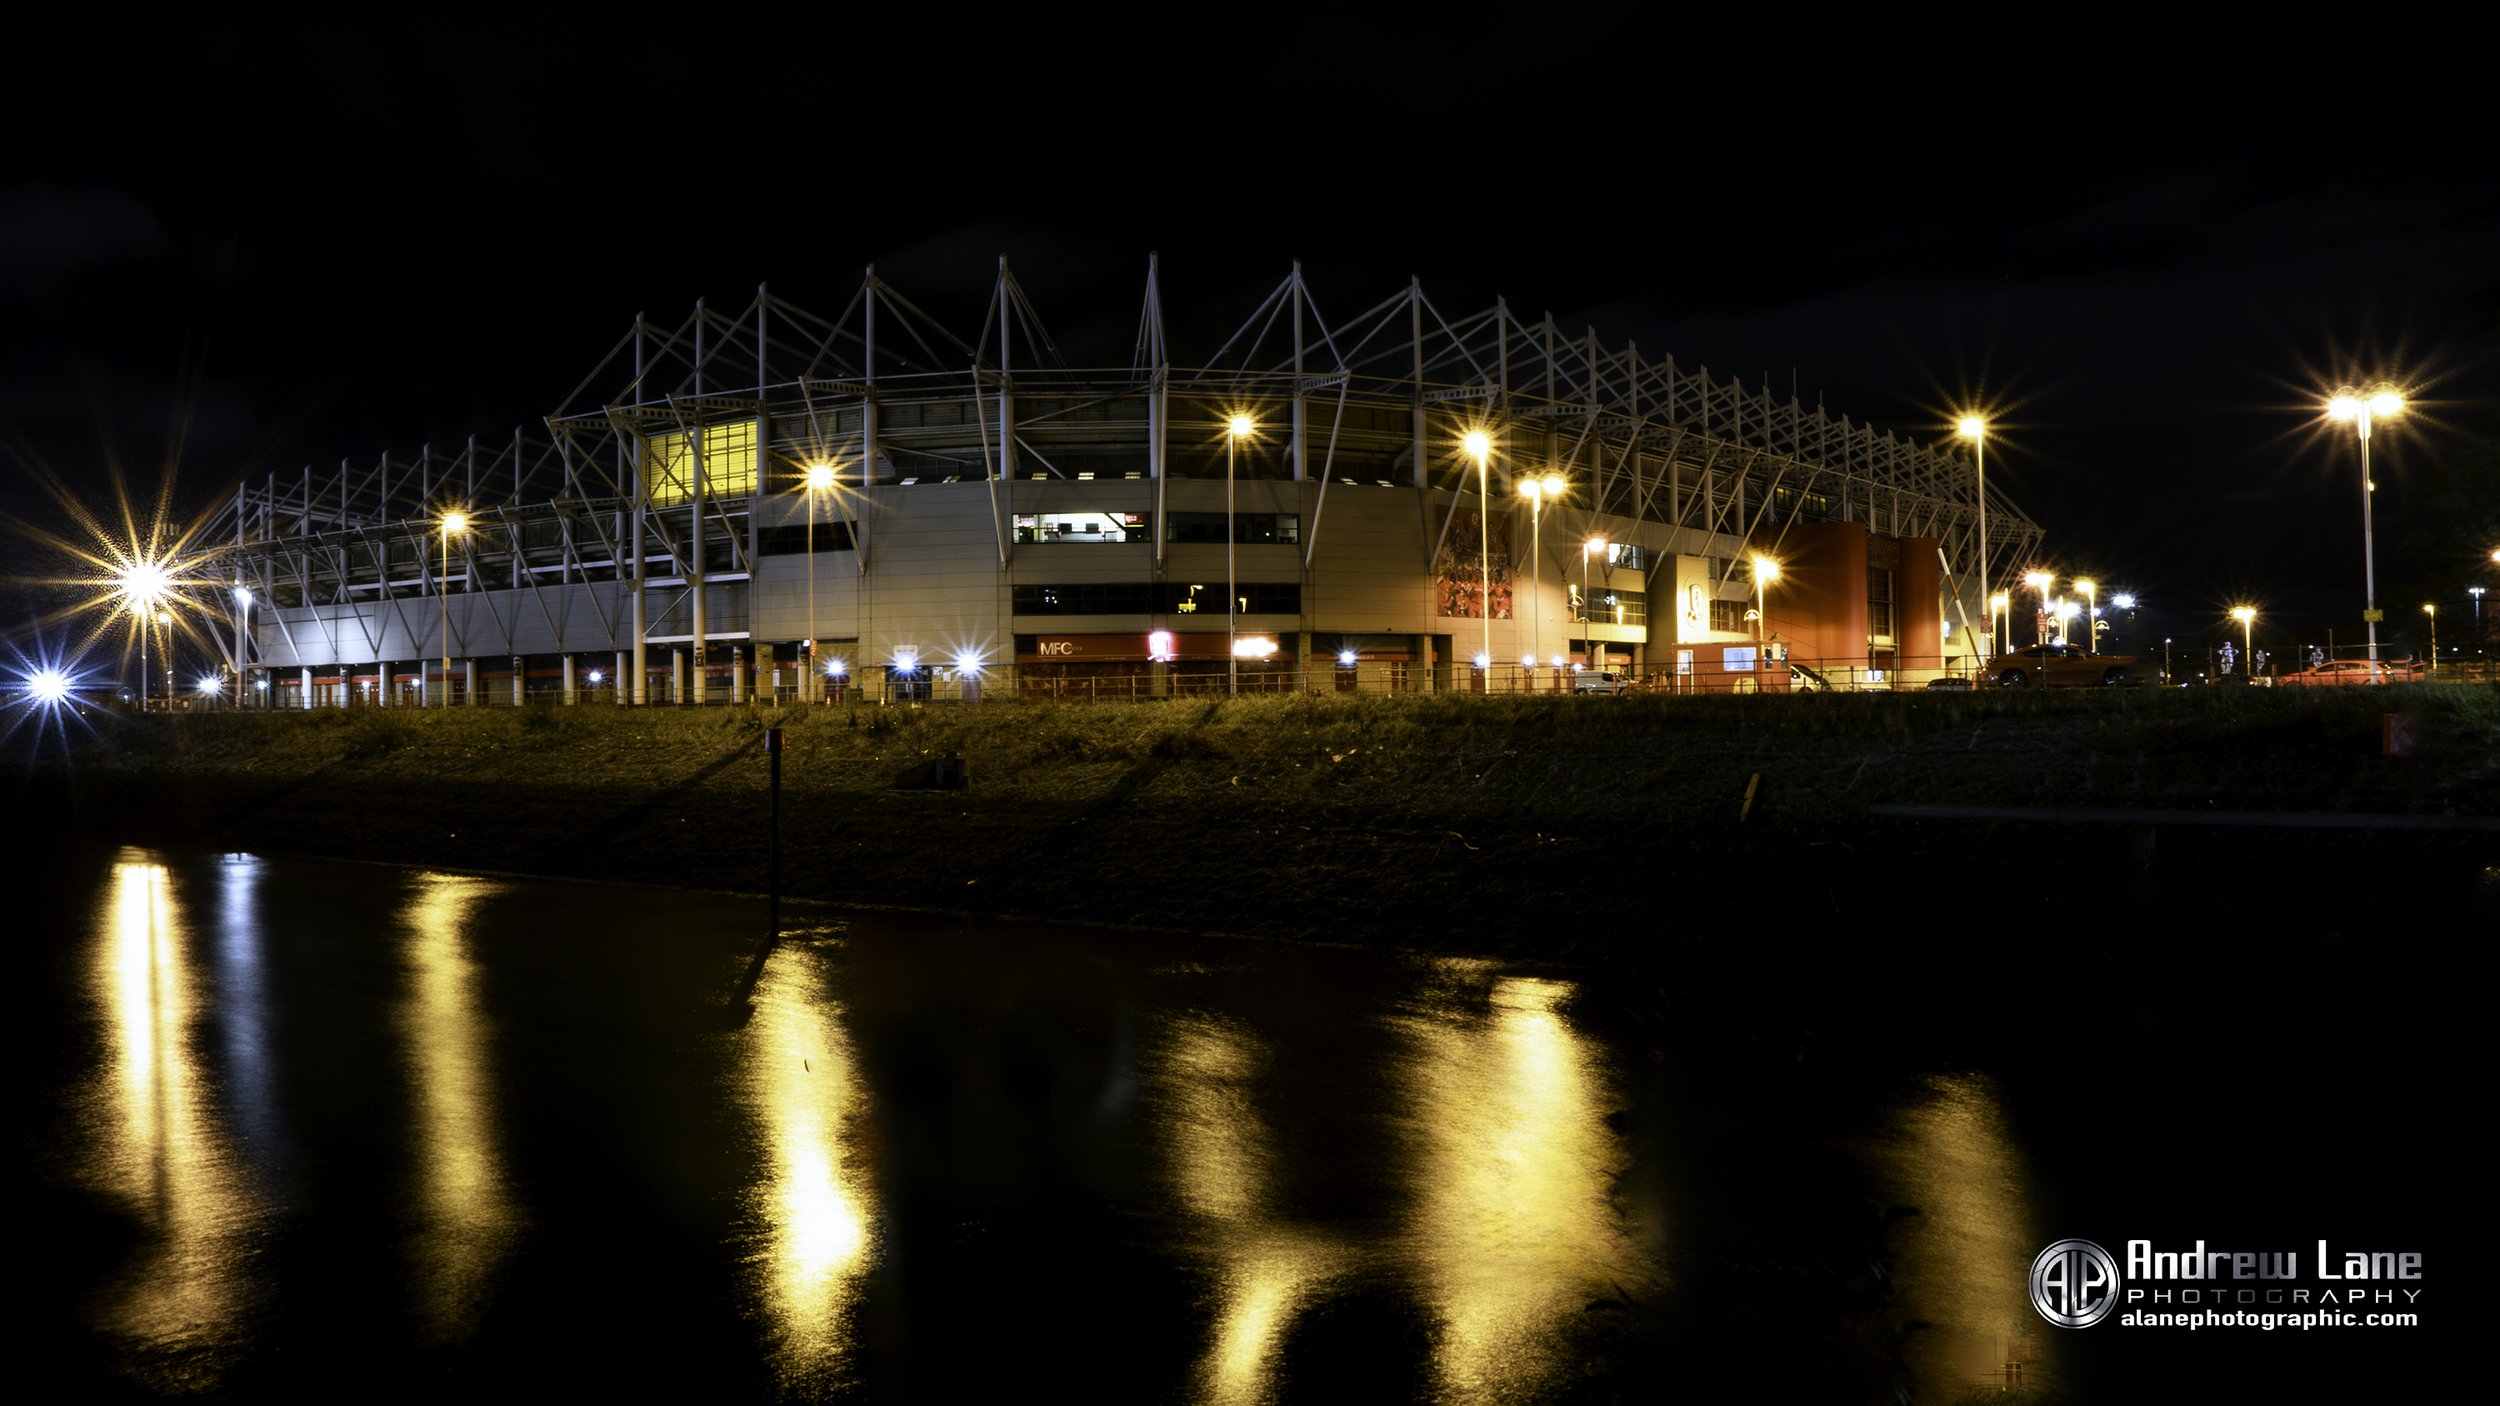  Middlesbrough Football clubs (MFC) Riverside stadium at night 